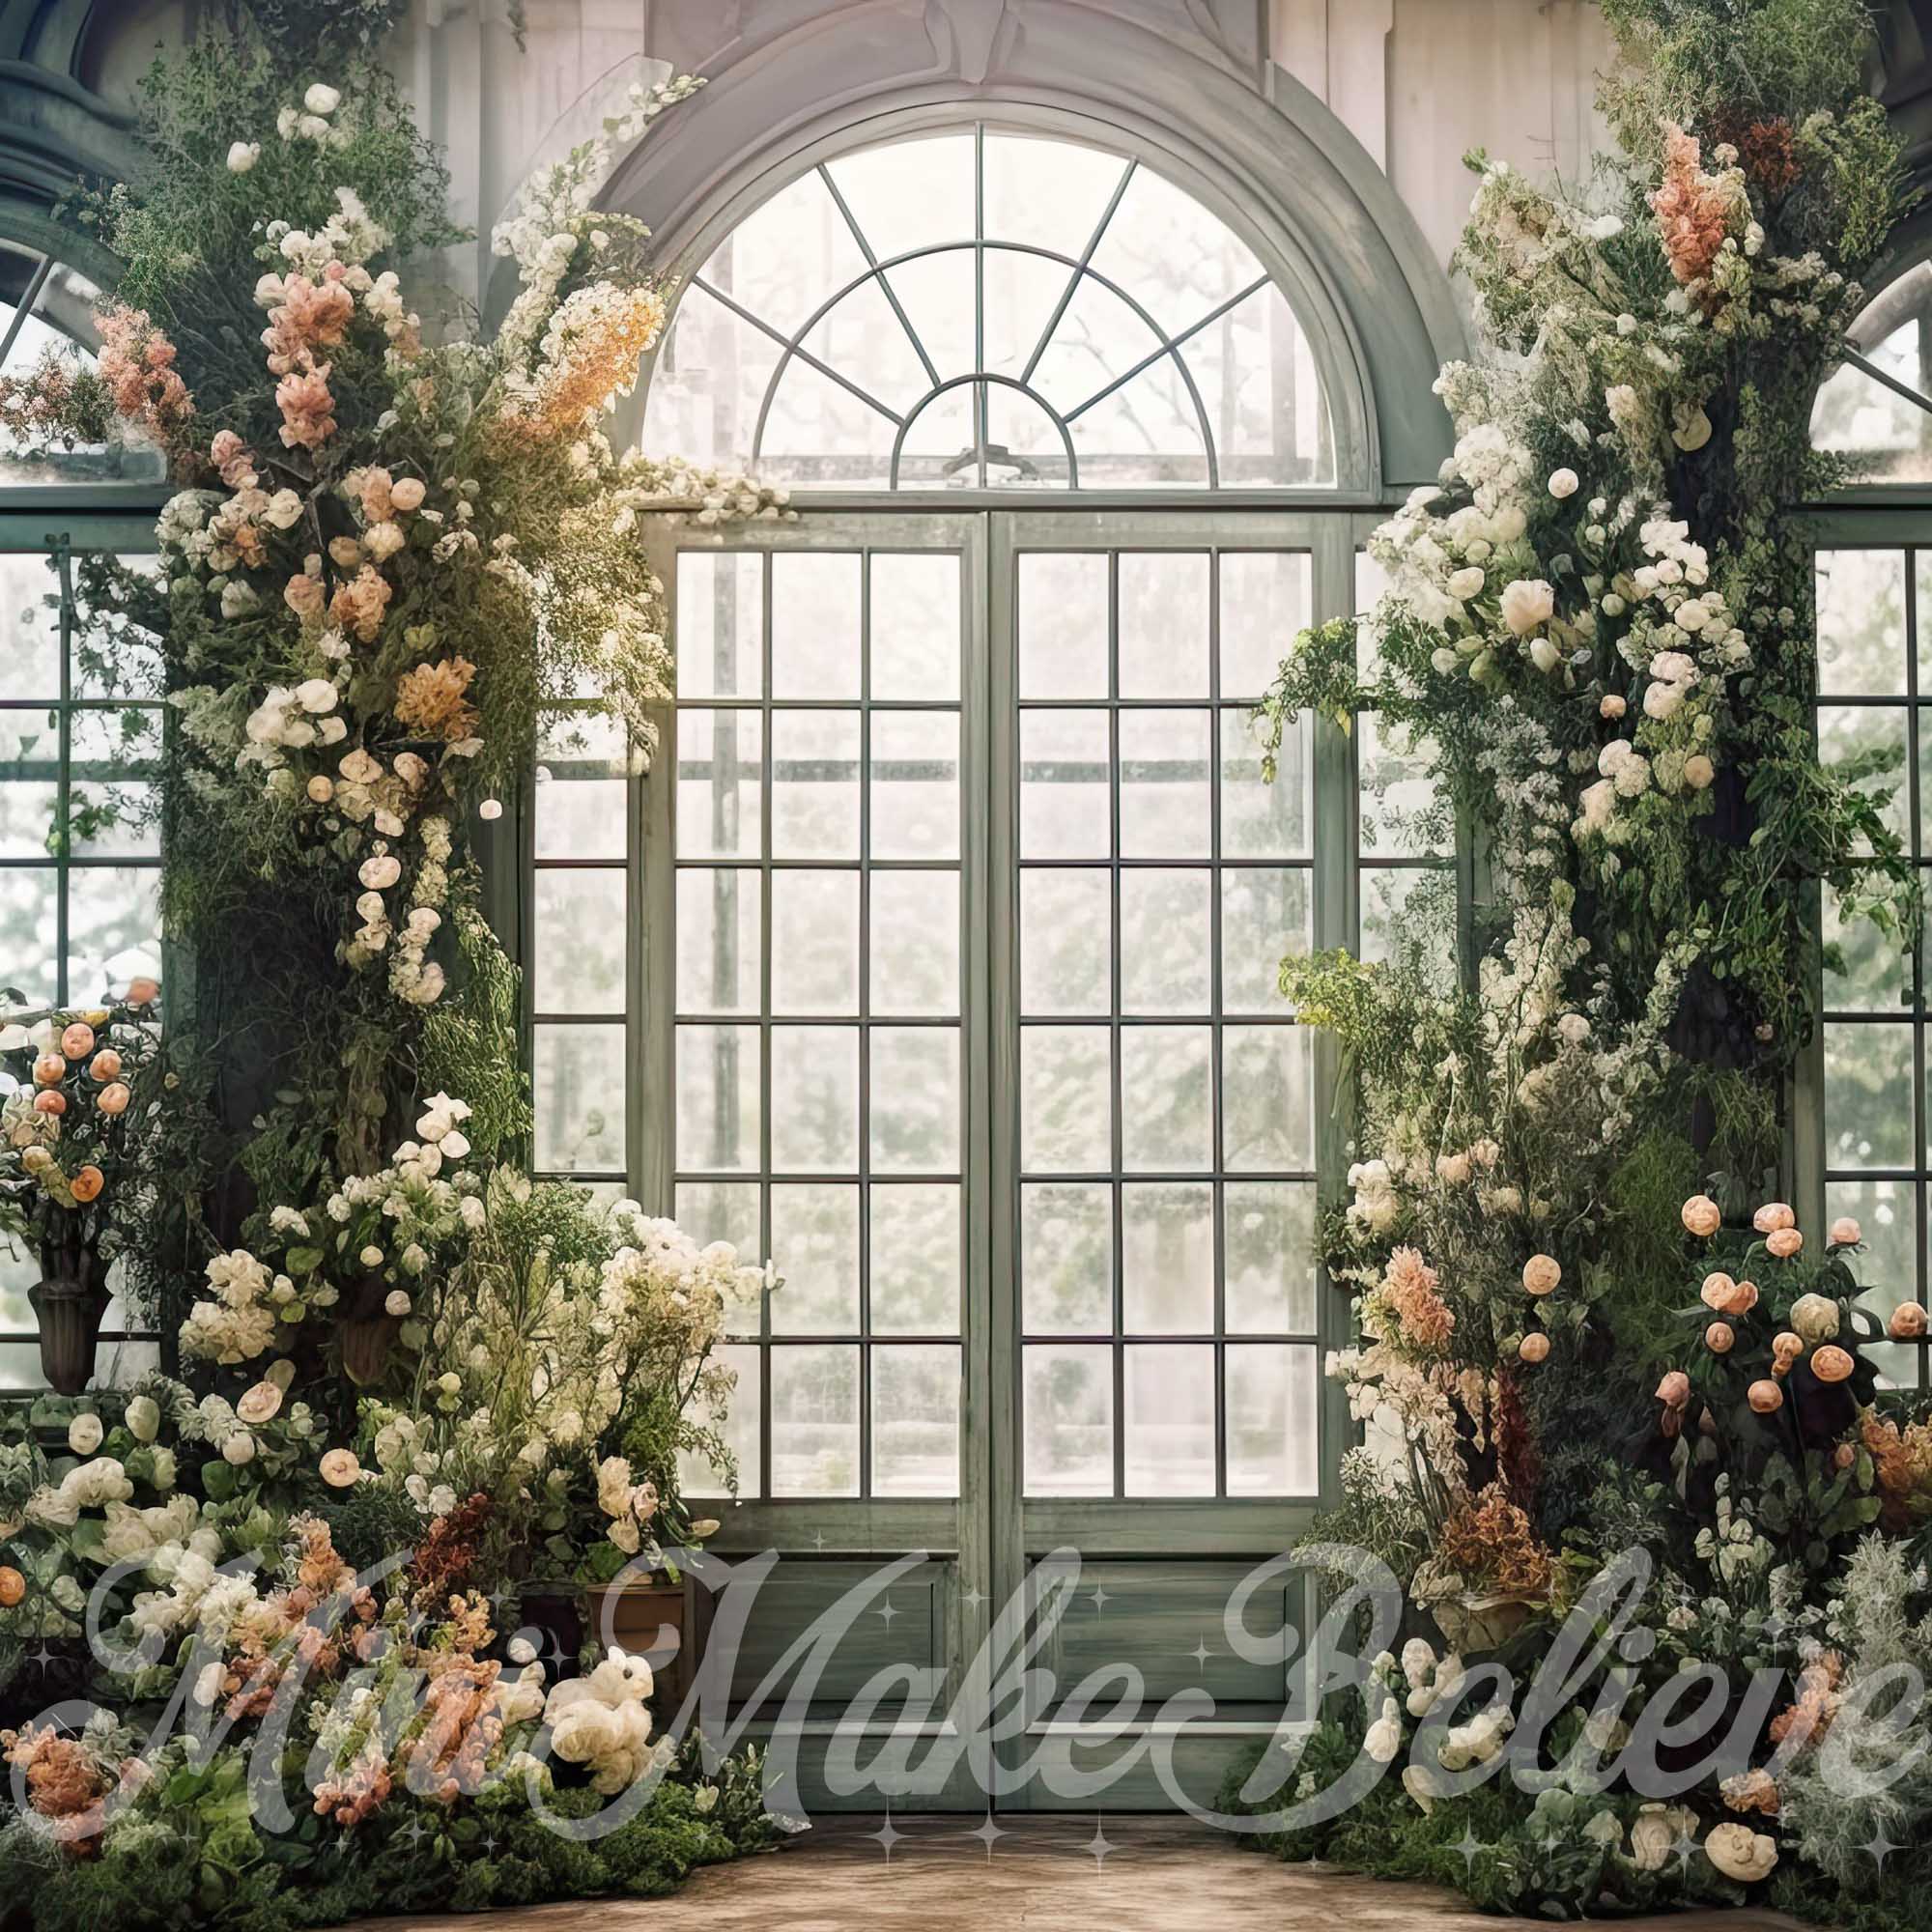 Kate Valentine Spring Backdrop Romantic Floral In Arbitrarium Designed by Mini MakeBelieve